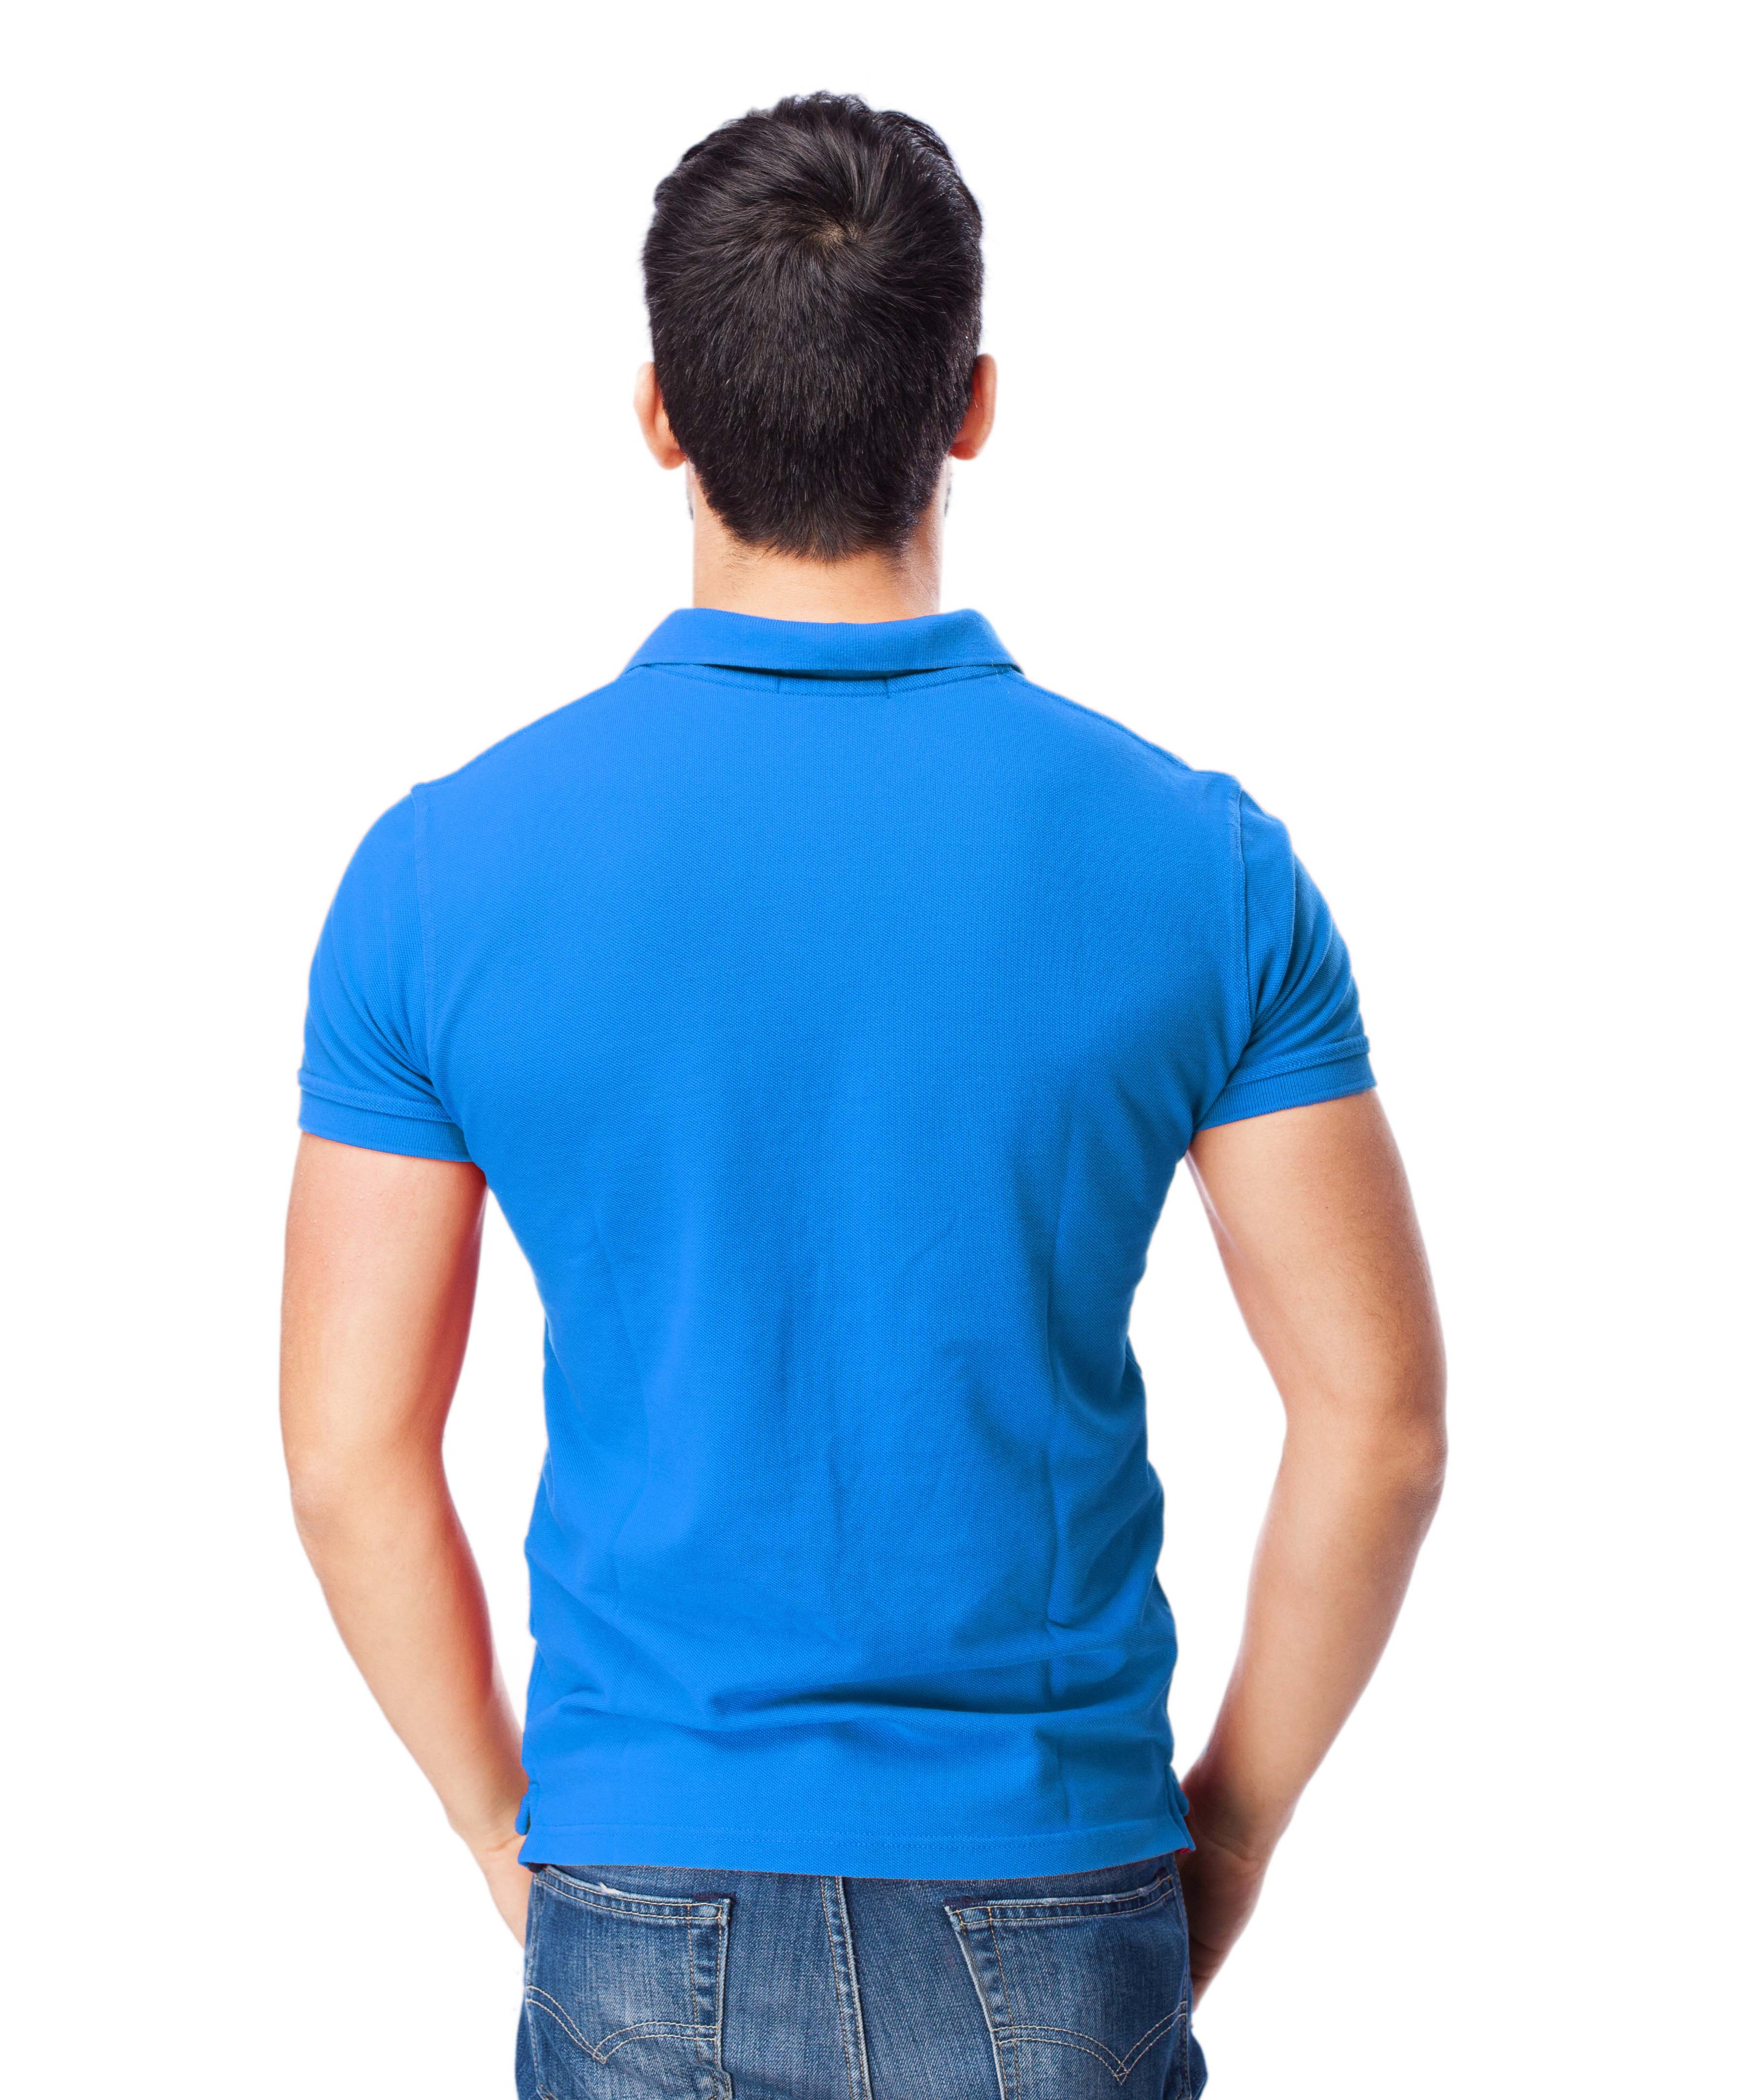 Premium Cotton Royal Blue Color Plain Polo Collar Tshirt